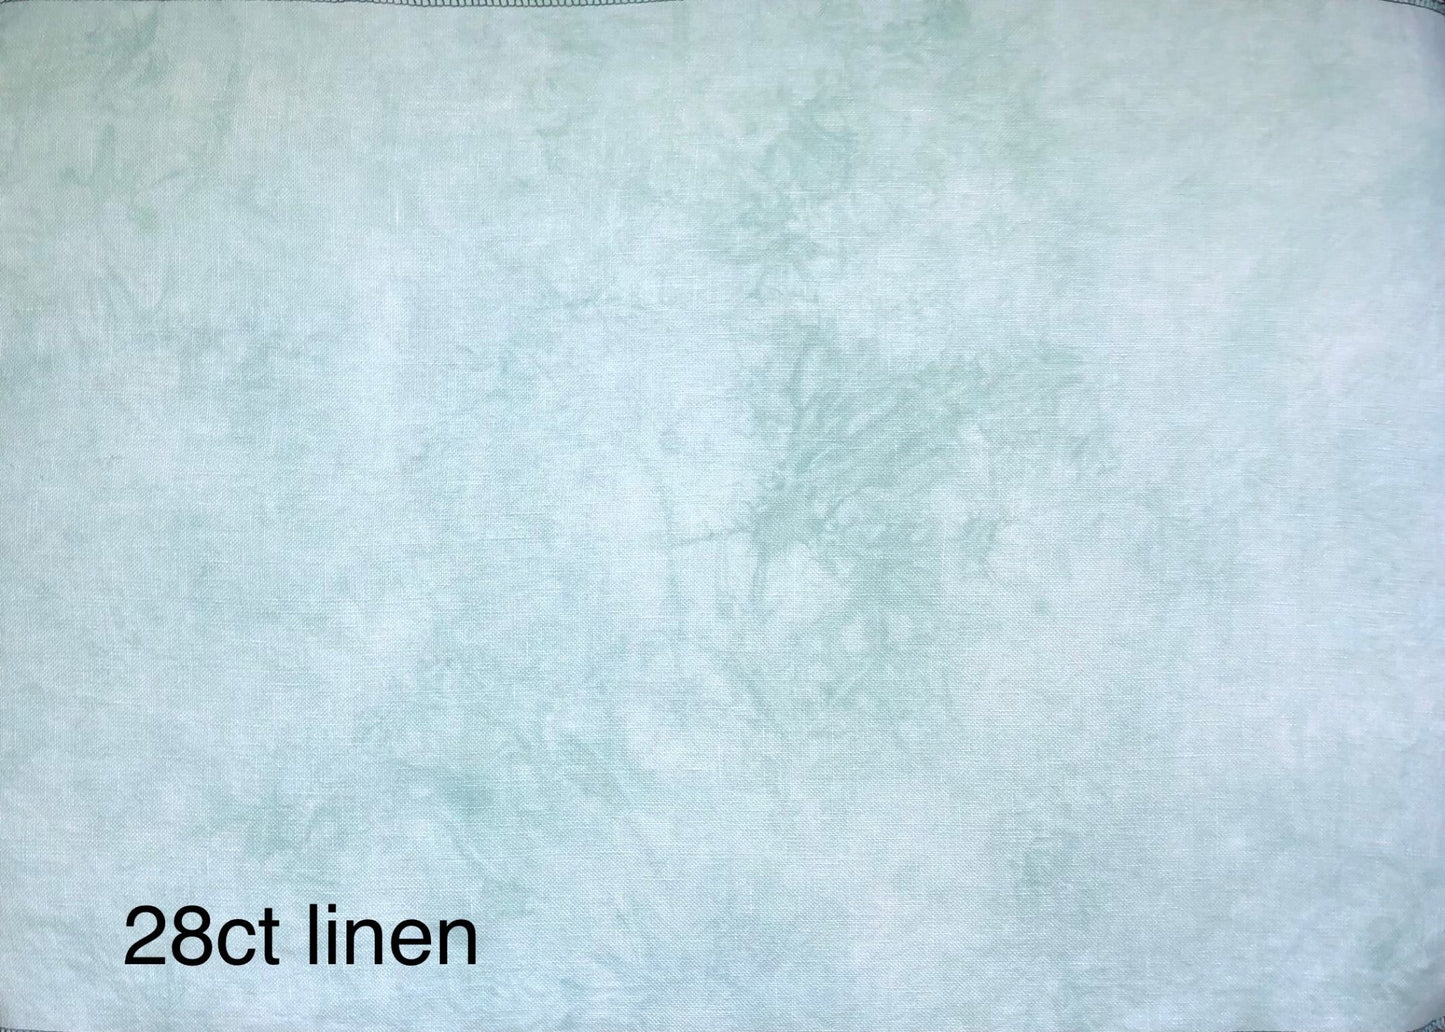 Linen - Harmonious - Dyeing for Cross Stitch